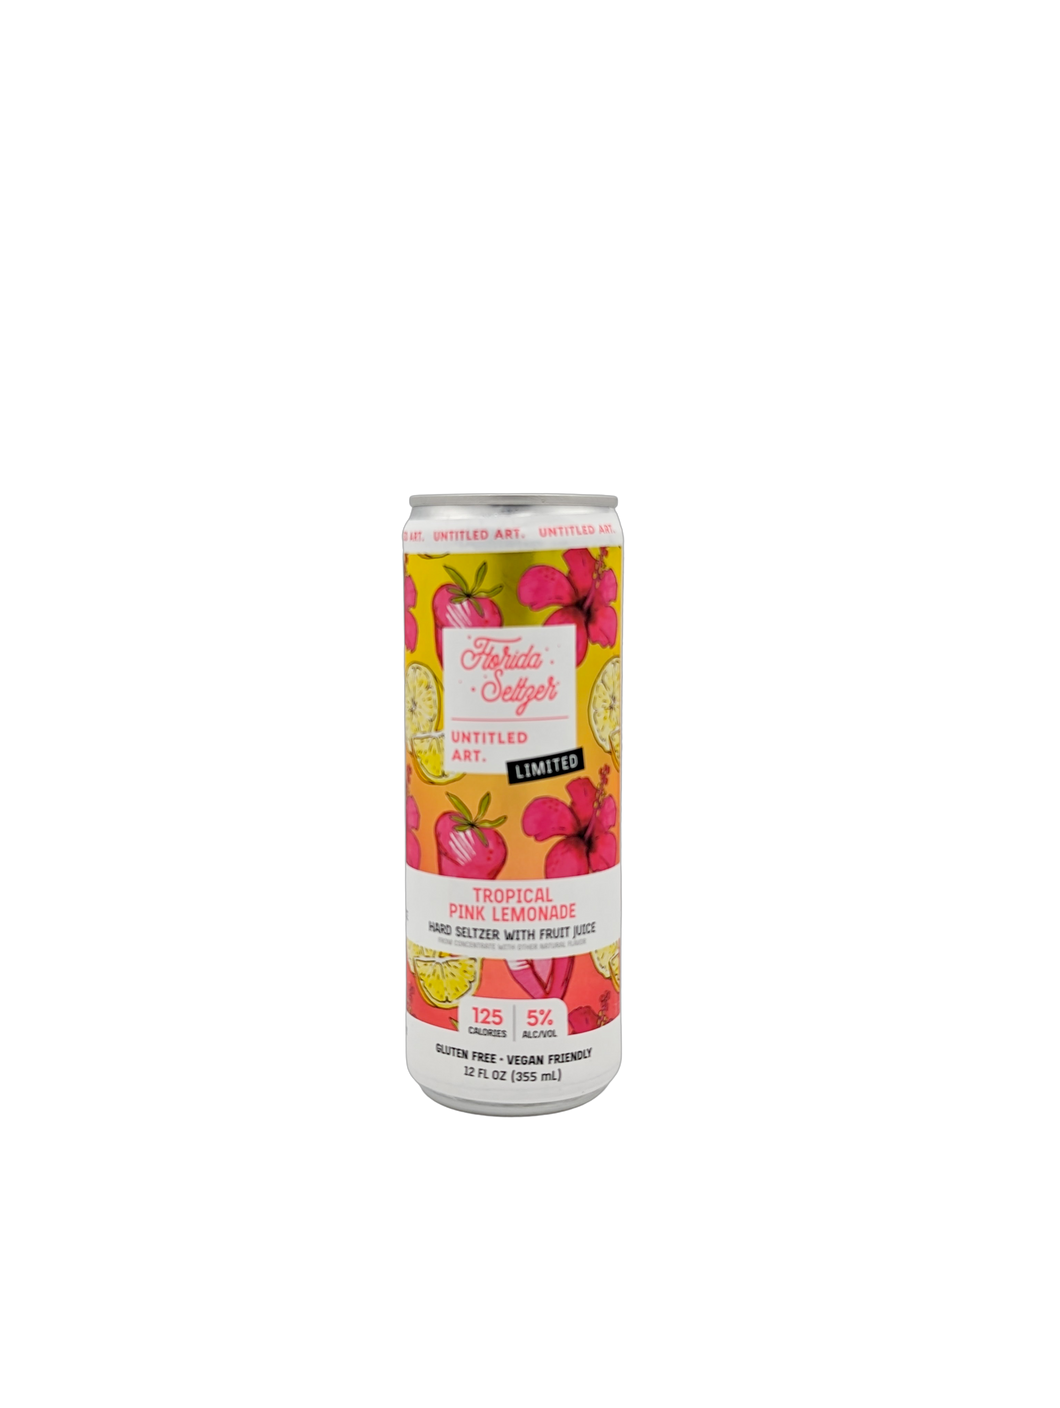 Untitled Art Florida Seltzer Tropical Pink Lemonade SINGLE